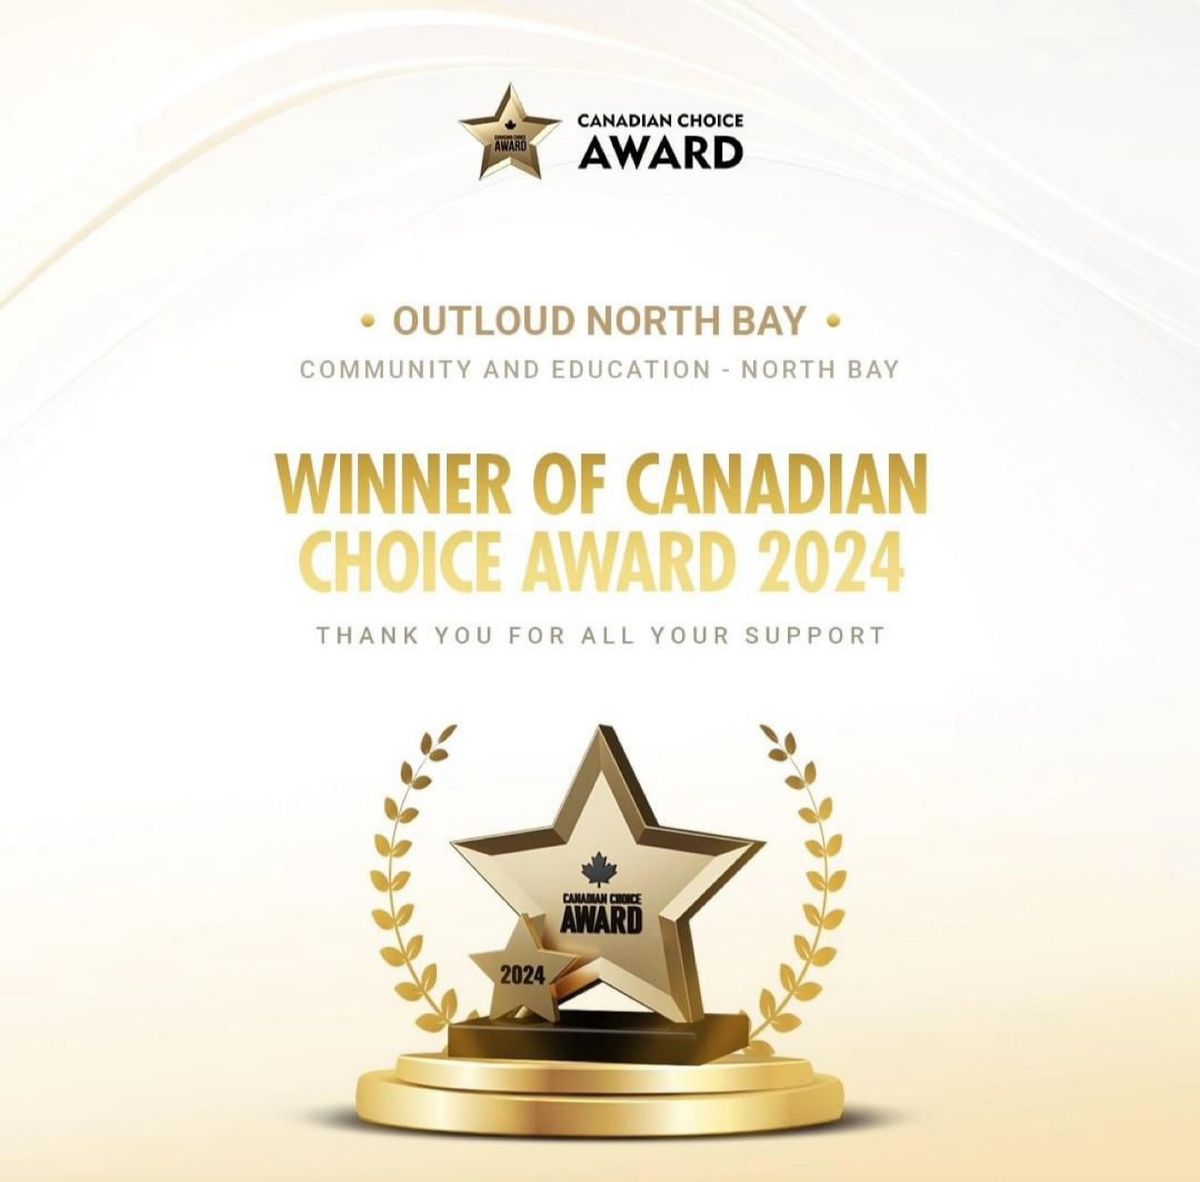 Outloud North Bay wins Major Canadian Award